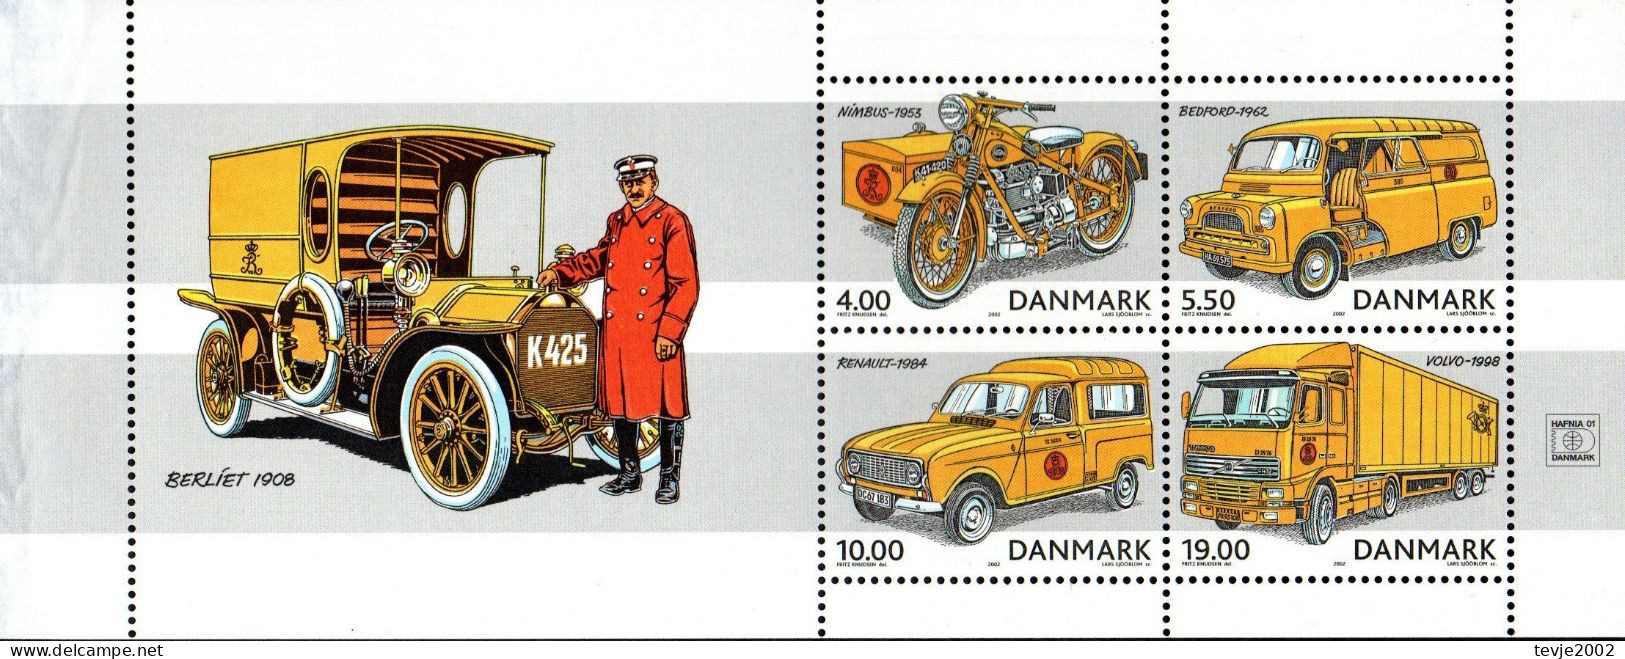 Dänemark 2002 - Mi.Nr. 1312 - 1315 (aus Markenheftchen) - Postfrisch MNH - Post - Ongebruikt